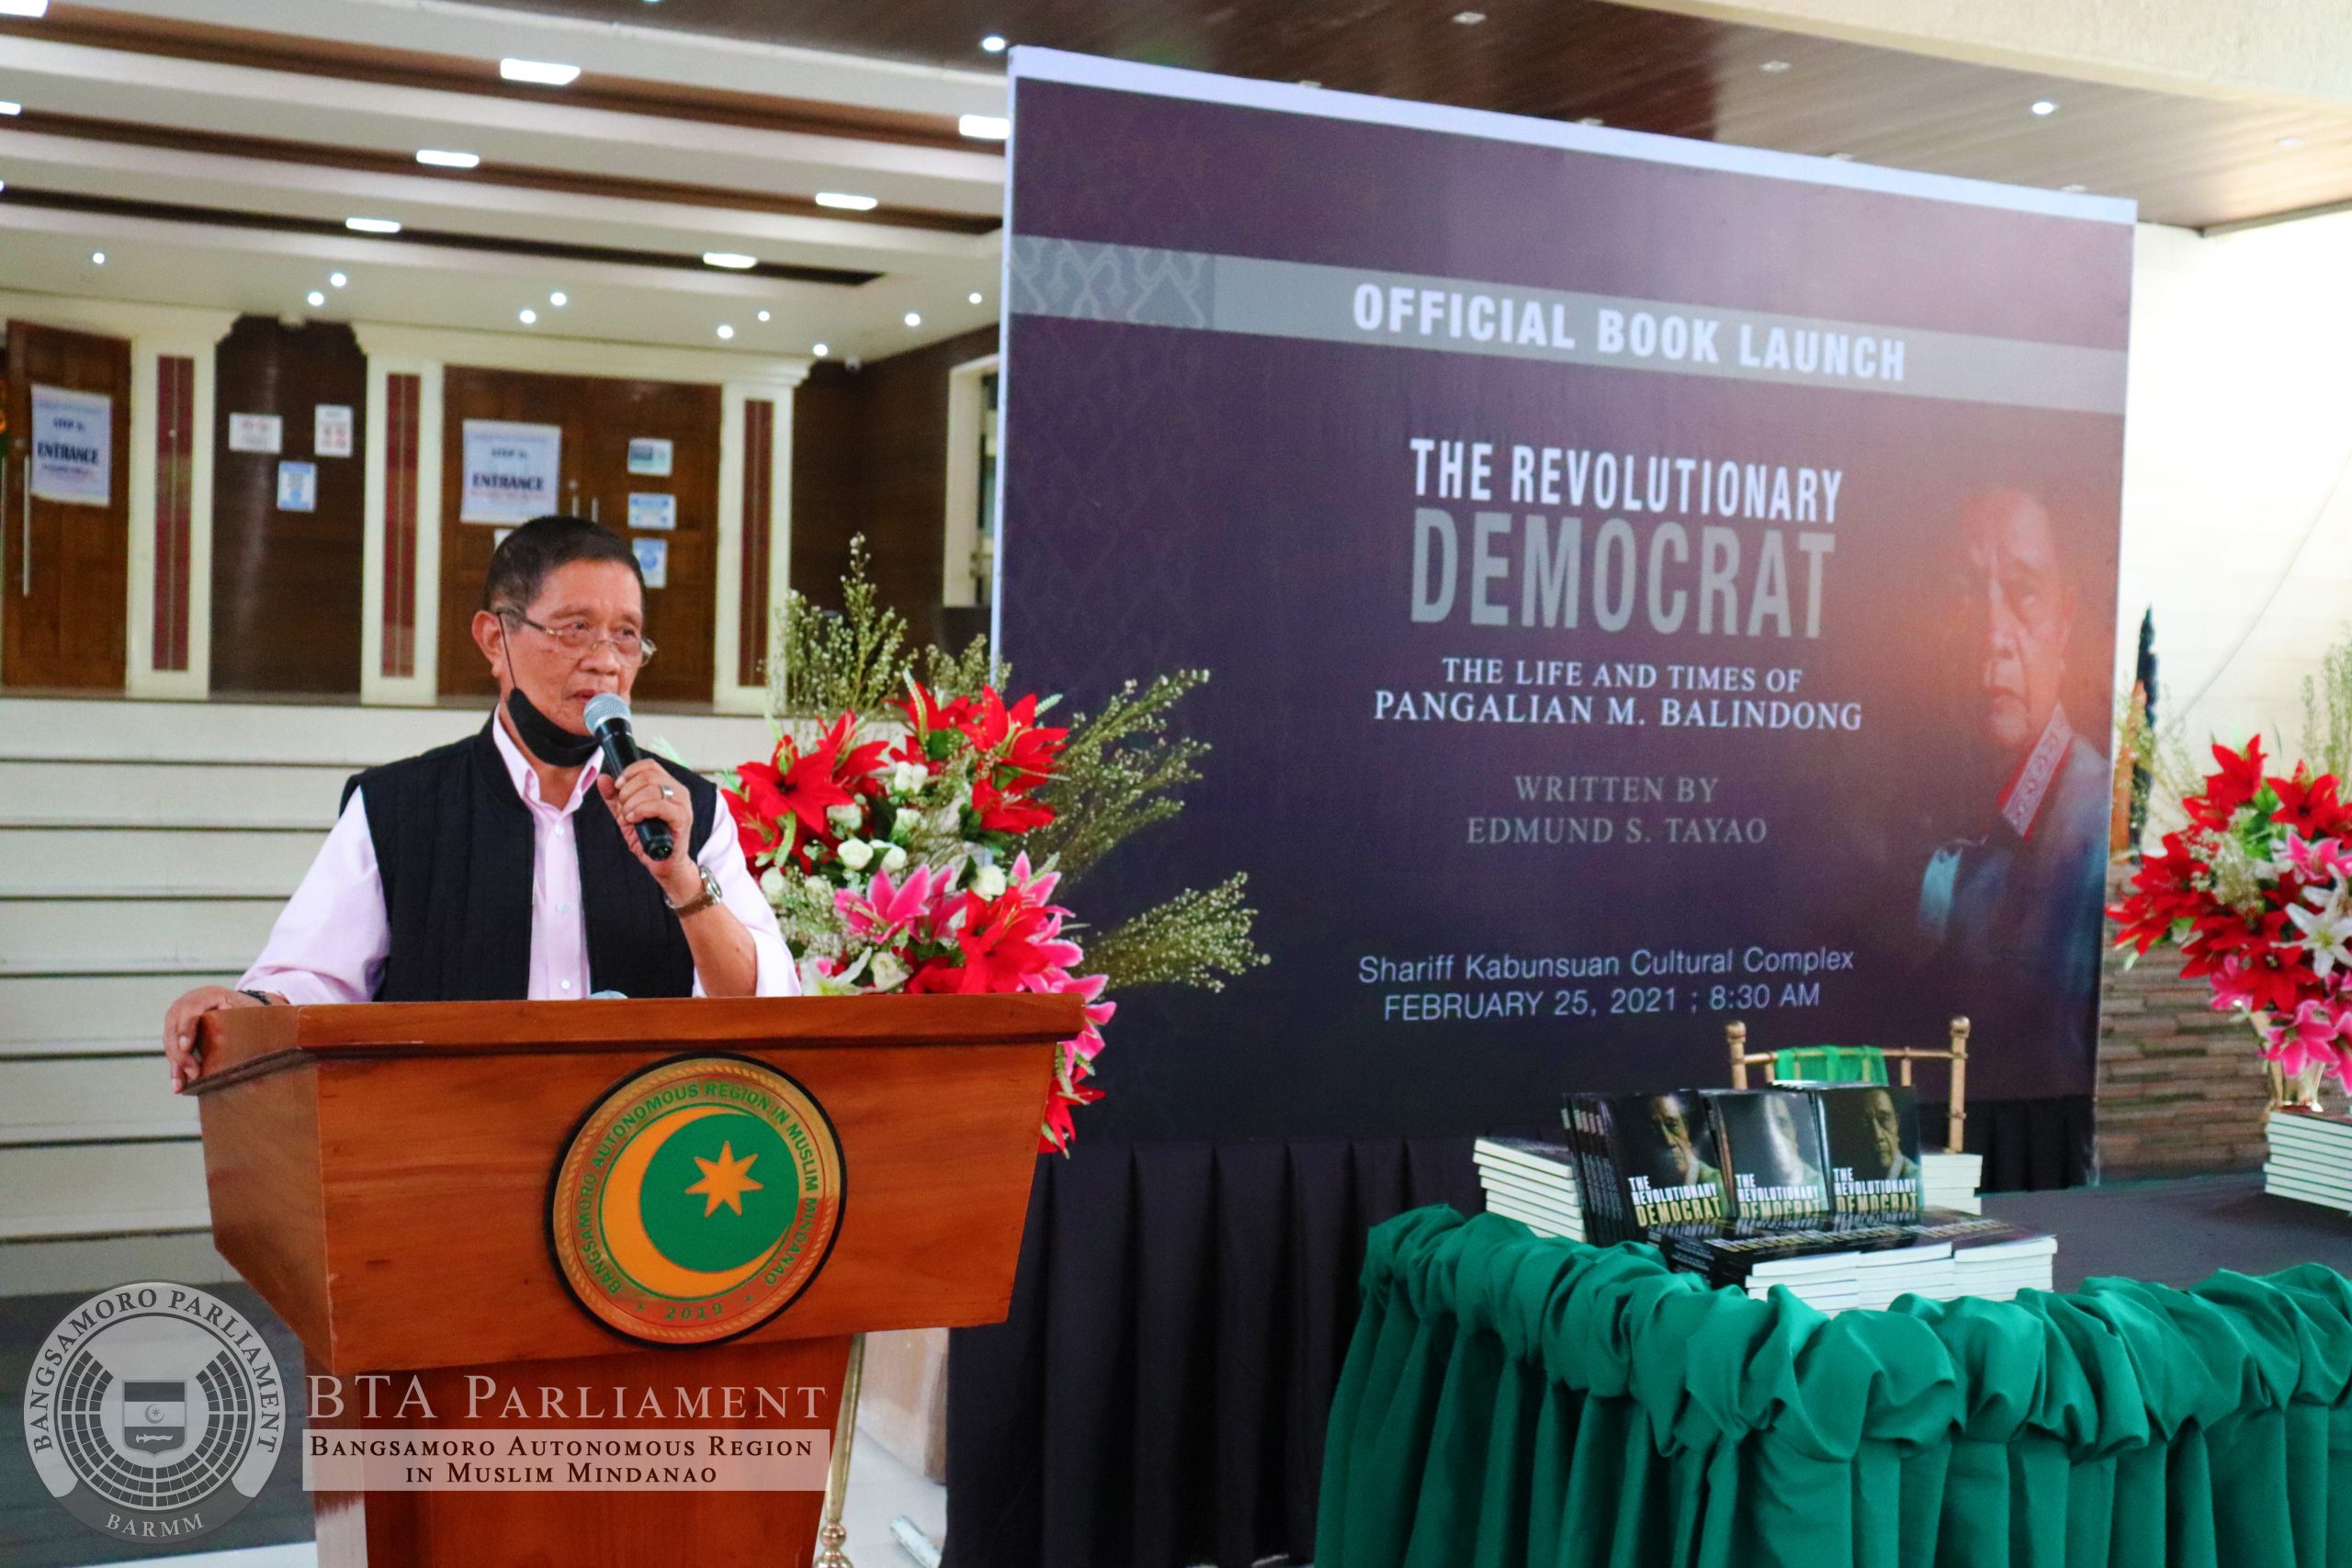 Speaker Balindong launches biography, “The Revolutionary Democrat”